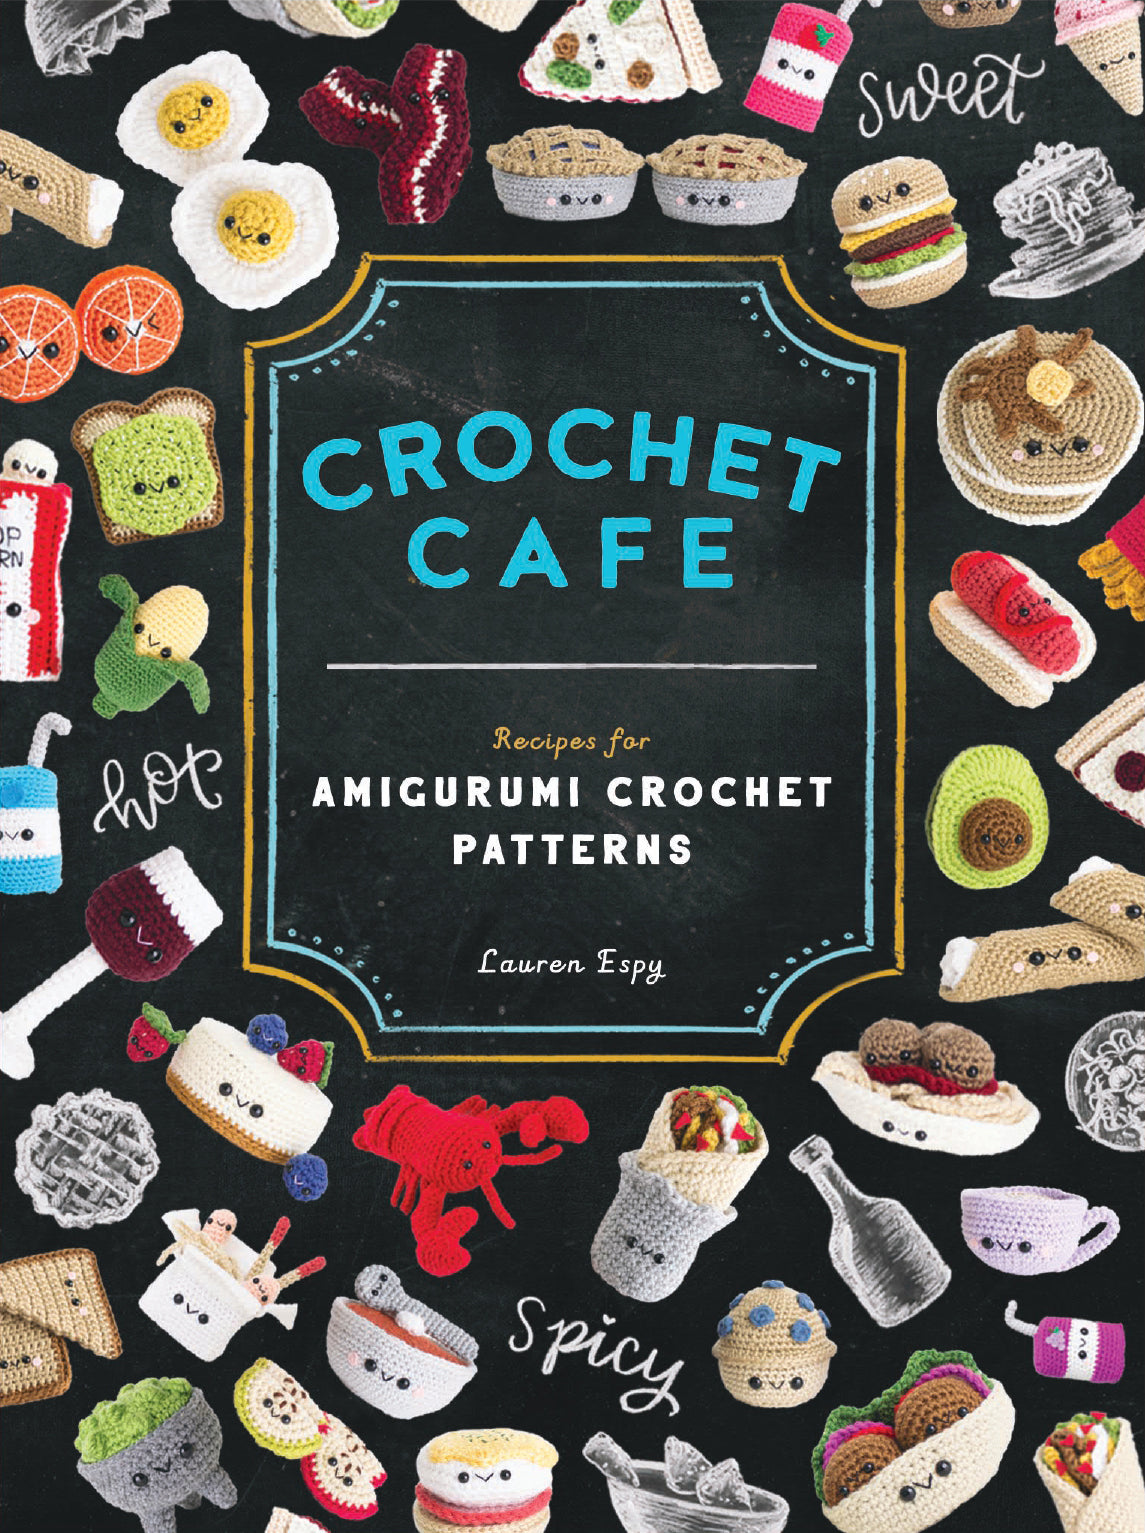 Crochet Cafe Amigurumi Pattern Book - A Menagerie of Stitches